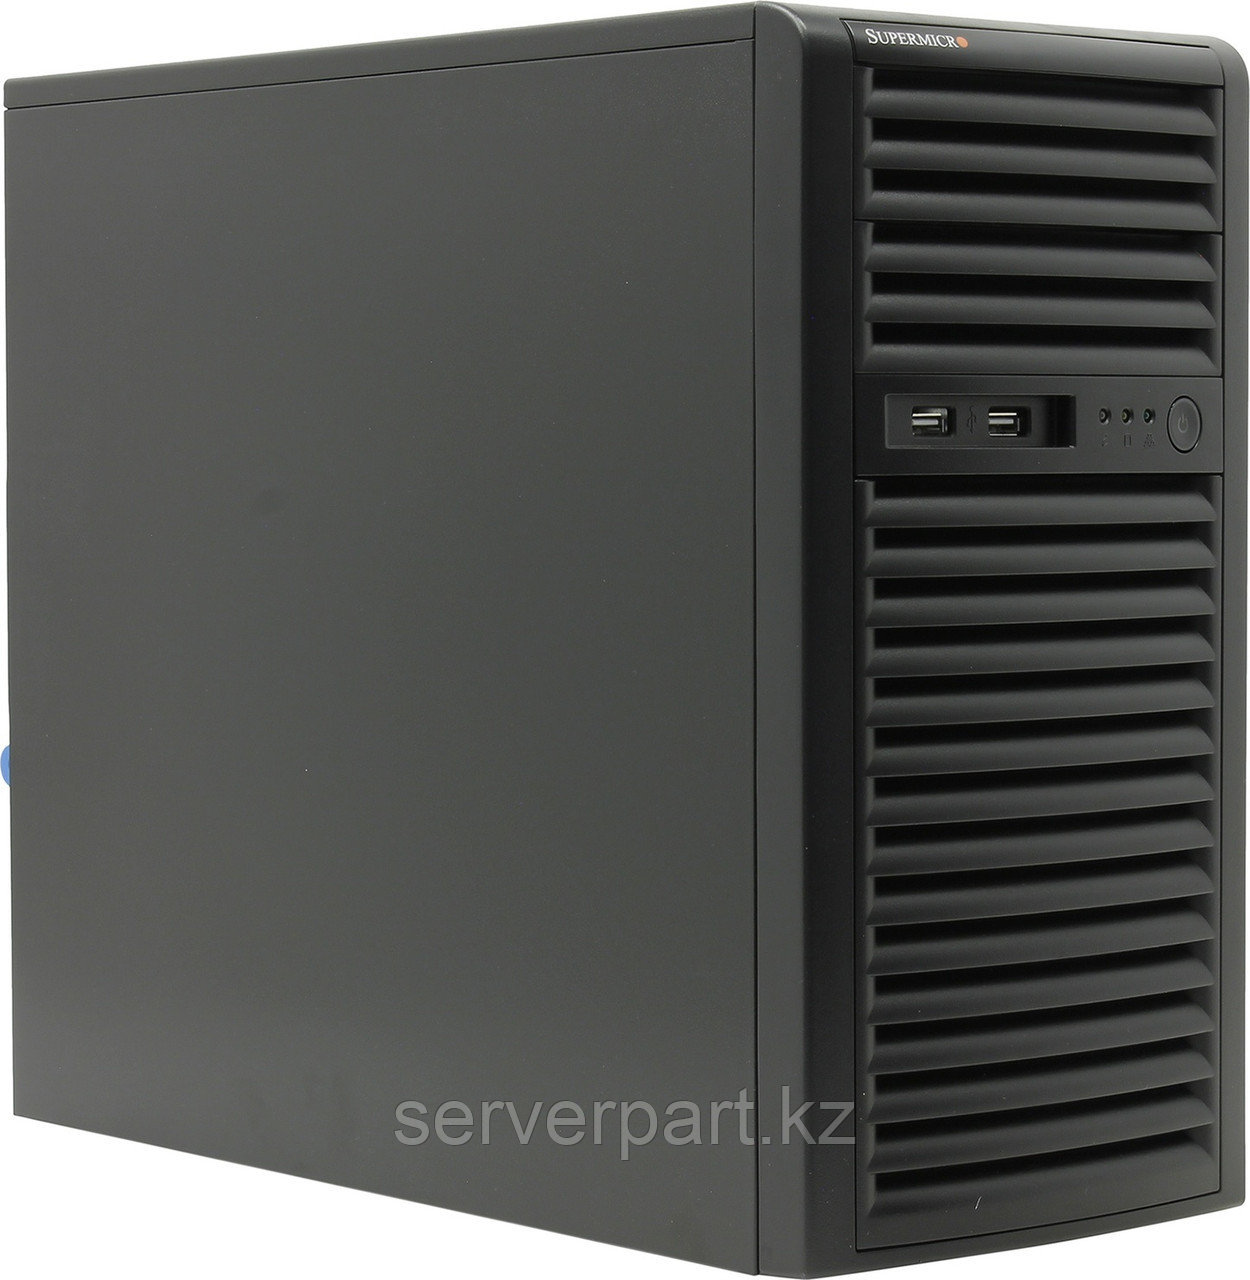 Сервер Supermicro SYS-5039C Tower 4LFF/4-core intel xeon E2124 3.3GHz/32GB UDIMM nECC/1x480GB SSD DT Hyb, фото 1